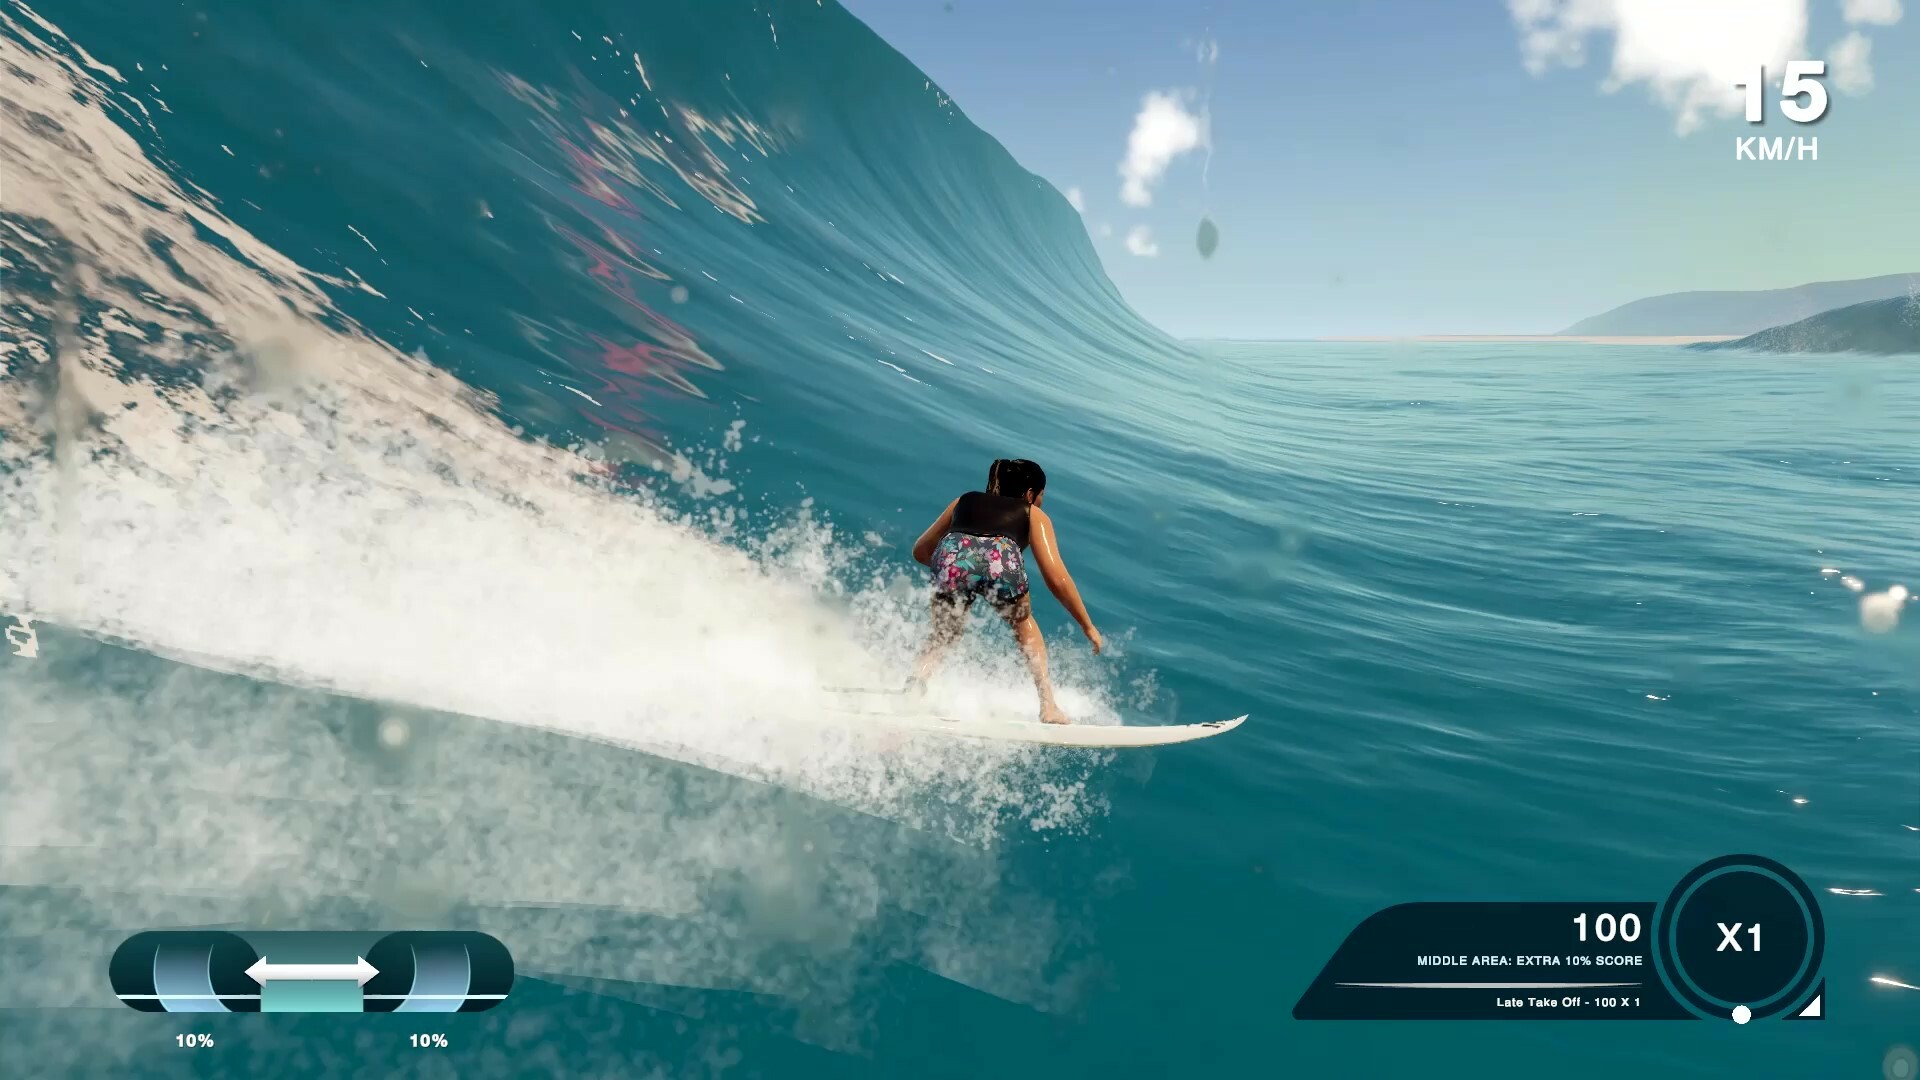 Barton Lynch Pro Surfing AR Xbox Series X,S CD Key